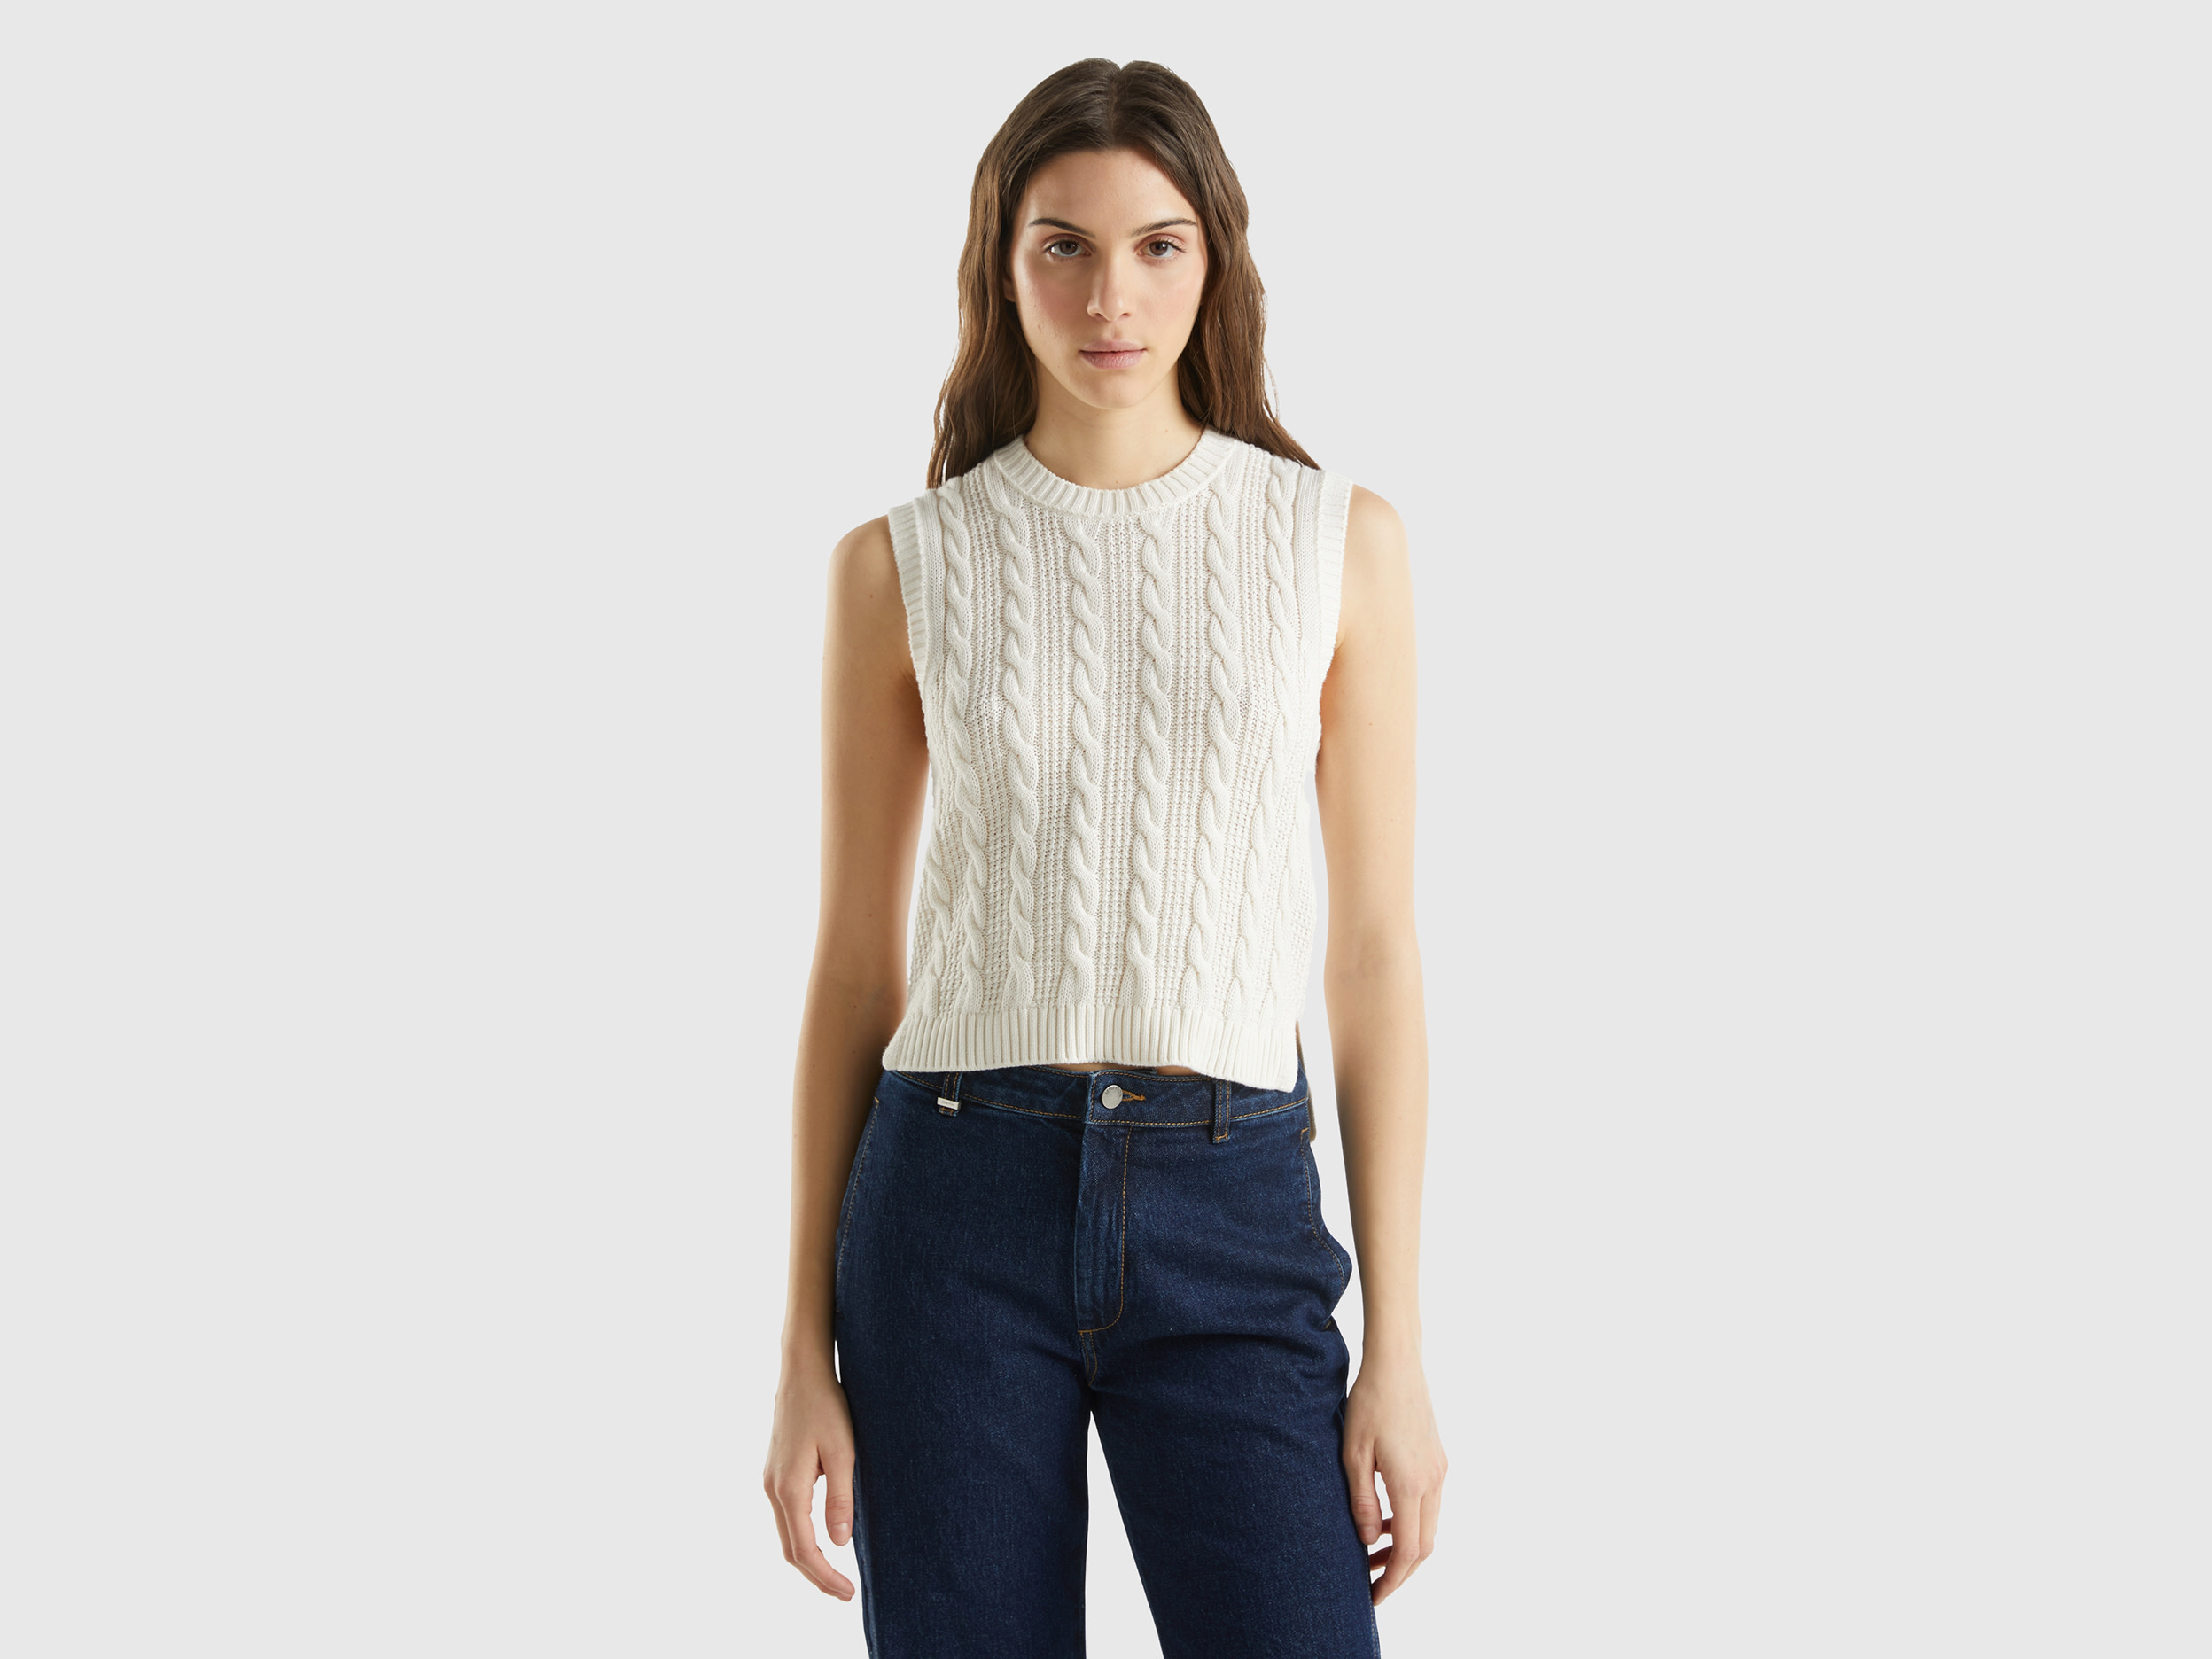 Benetton, Cropped Cable Knit Vest, size L, Creamy White, Women